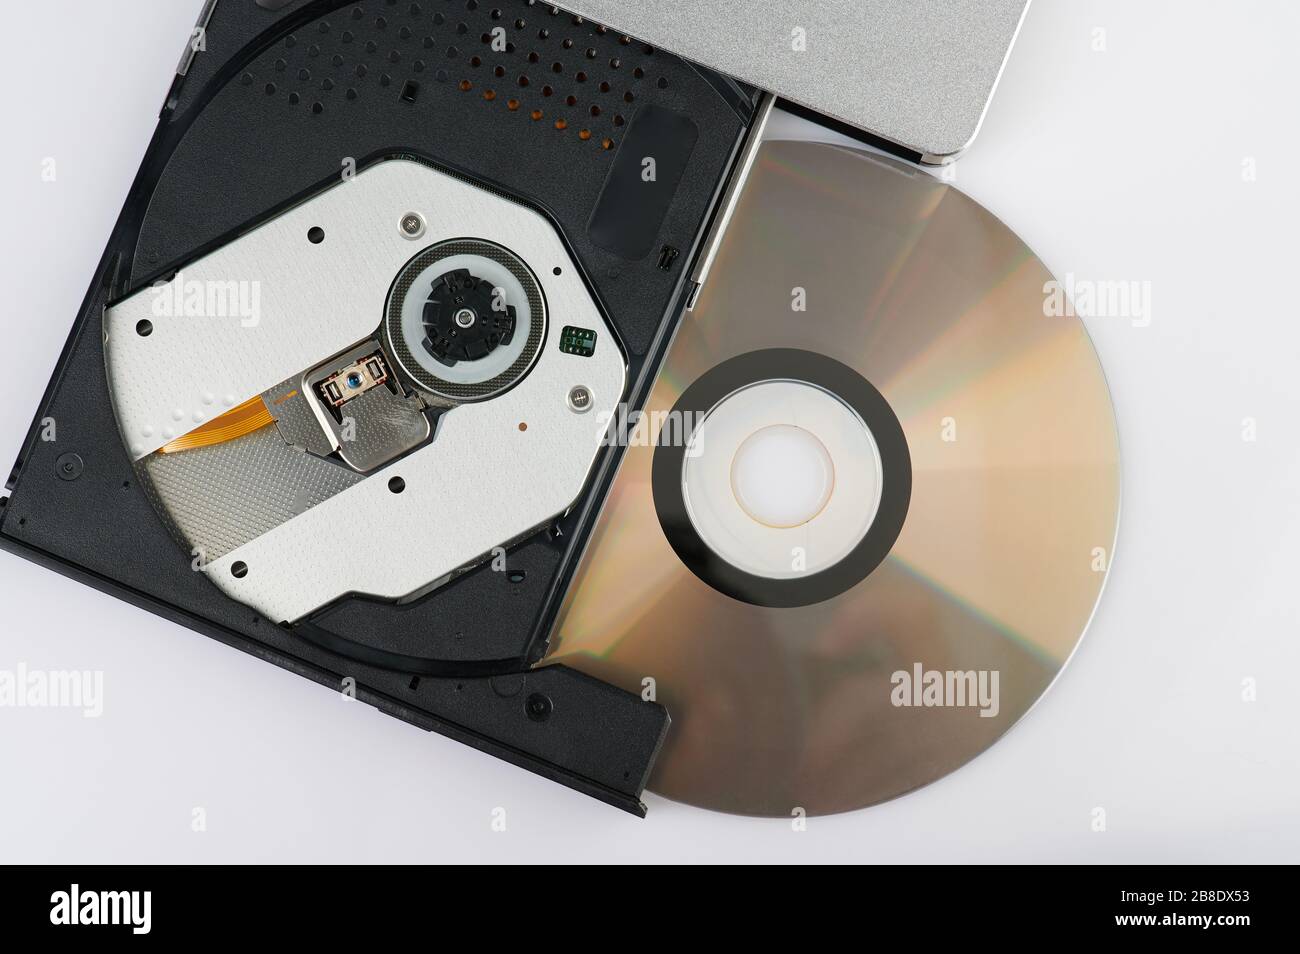 Storage on dvd theme. Burning cd device isolated Stock Photo